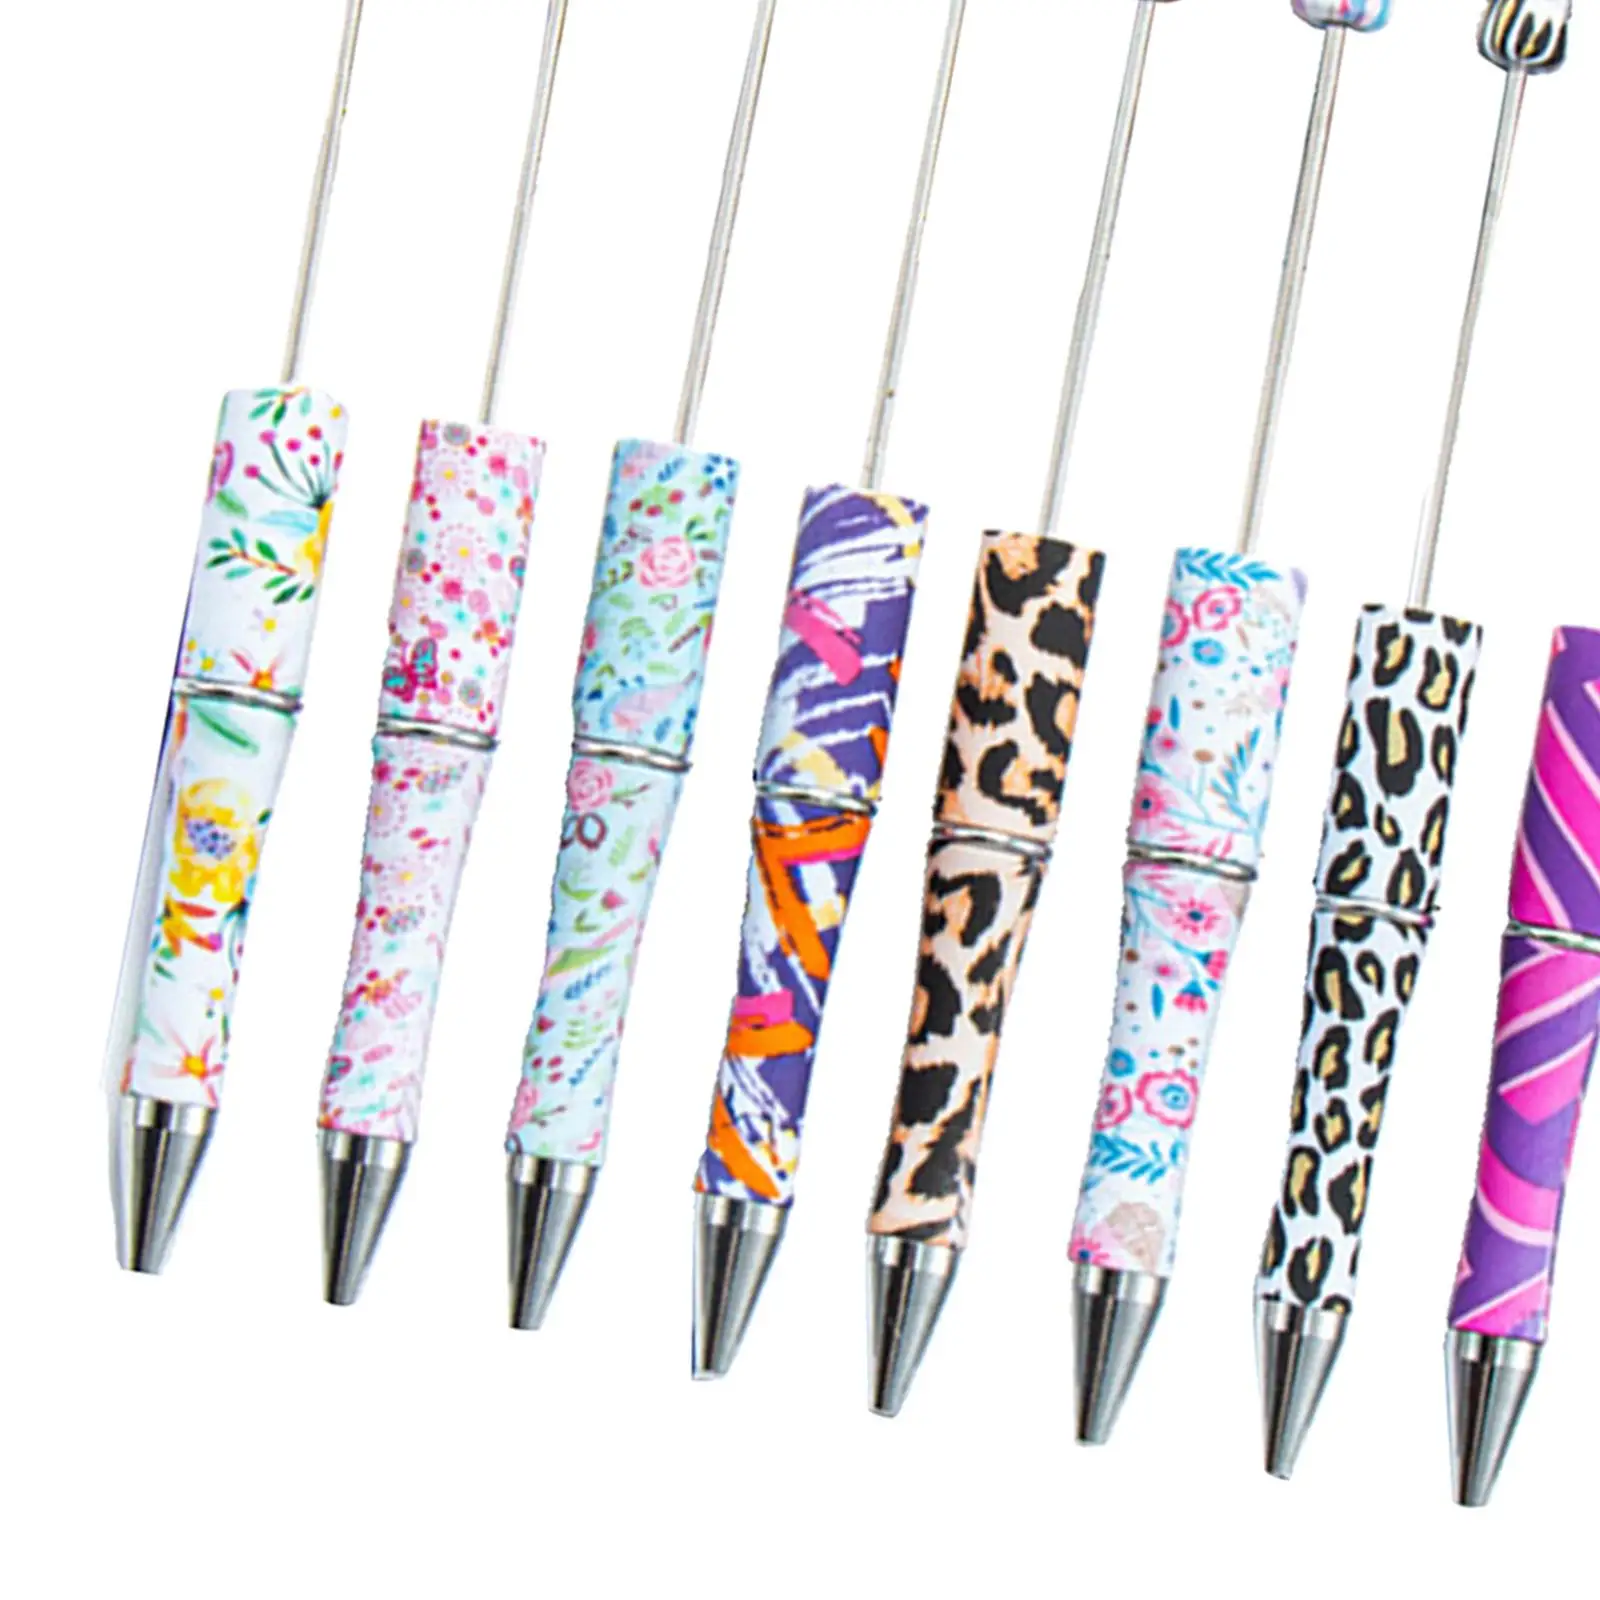 10x Beaded Pen Bead Pens Printable Multicolor Ball Pen Bead Pen Beadable Pen Creative for Draw Journaling Exam School DIY Making